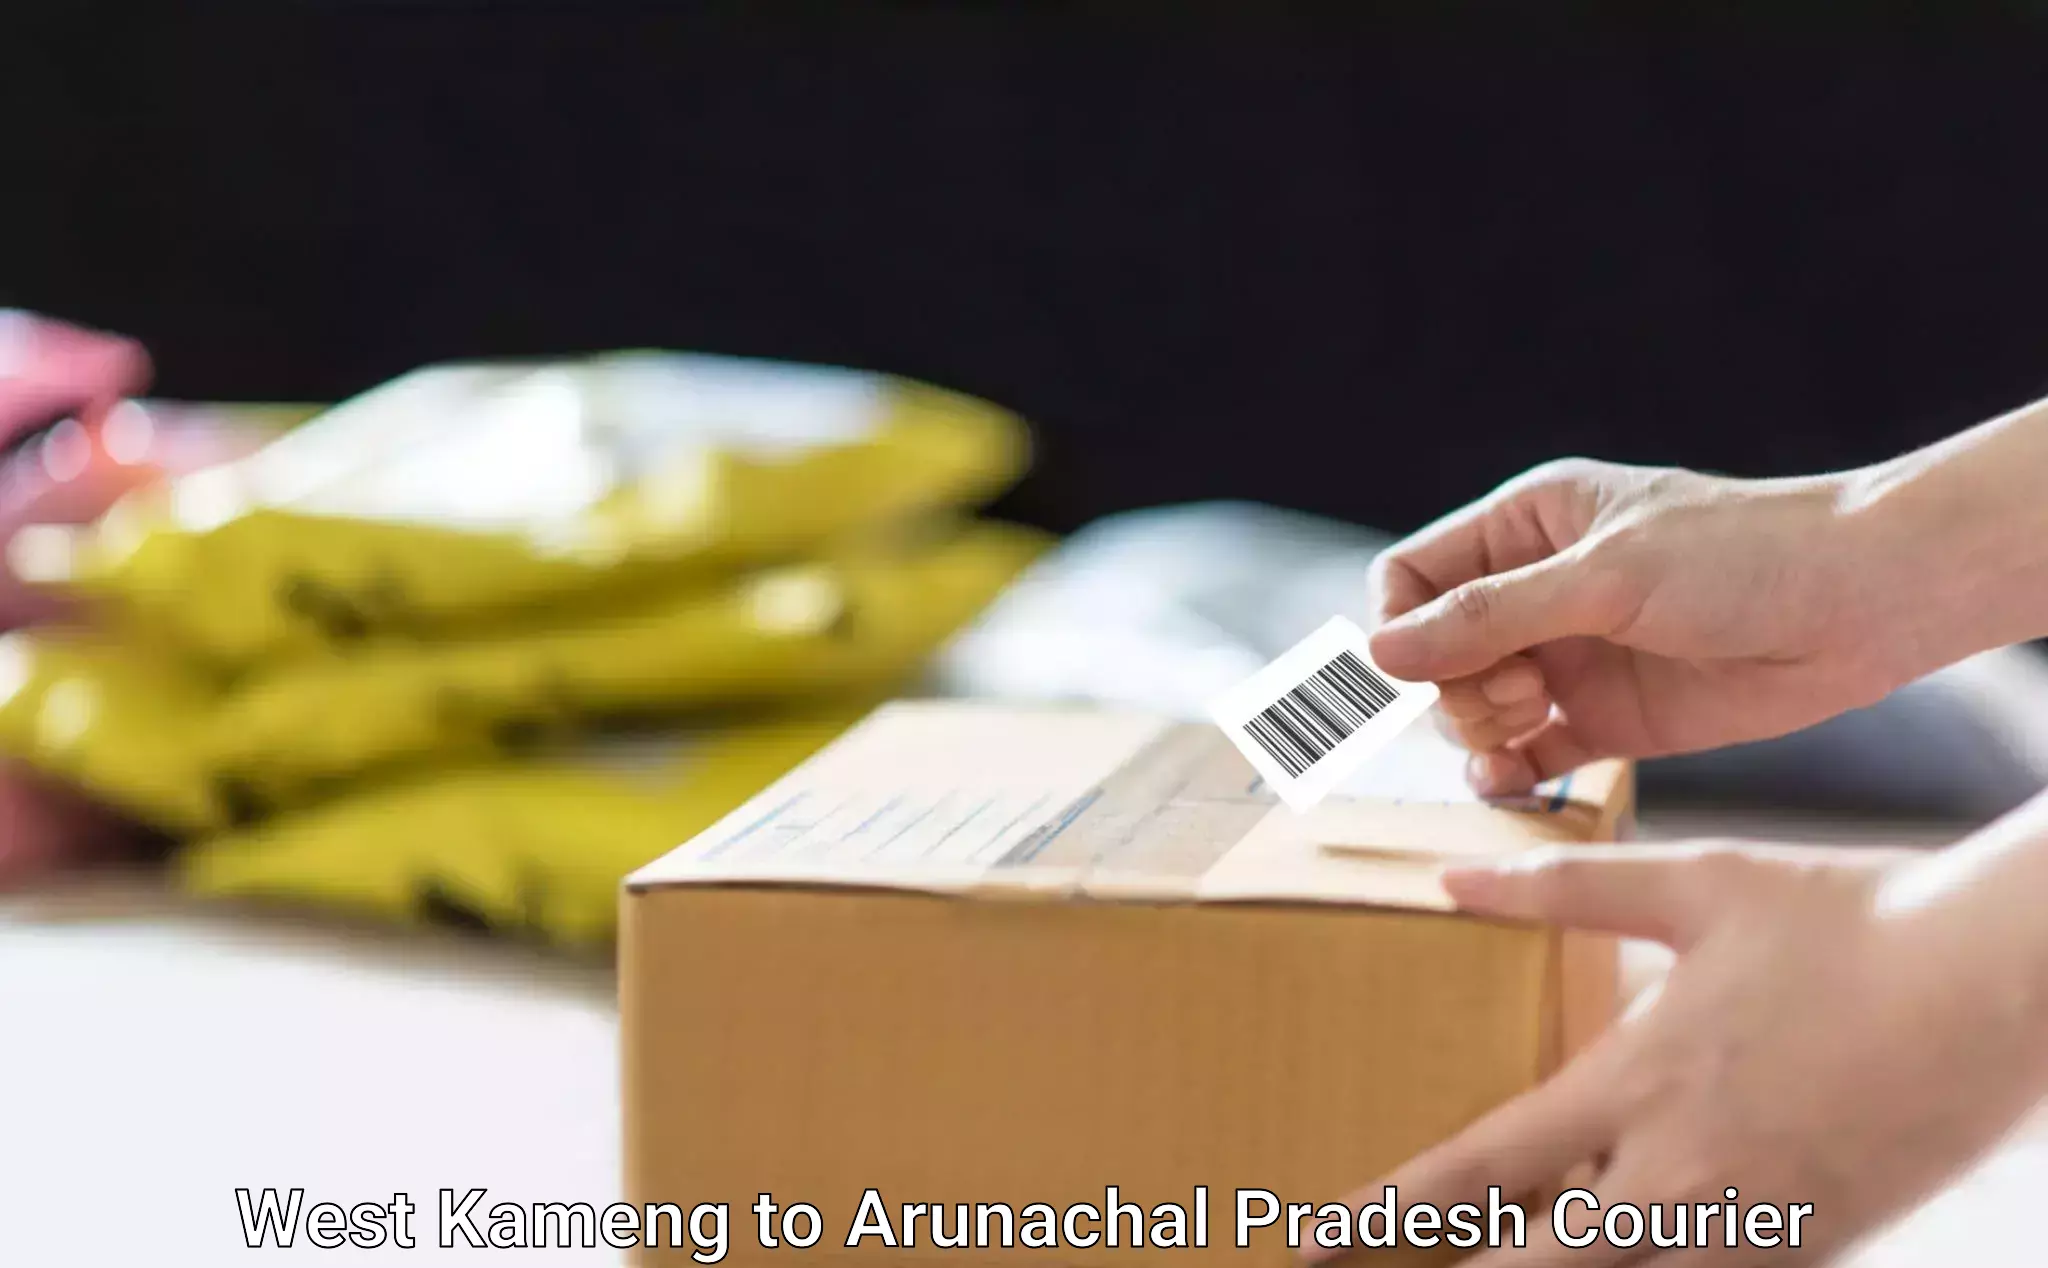 Professional courier services West Kameng to Arunachal Pradesh